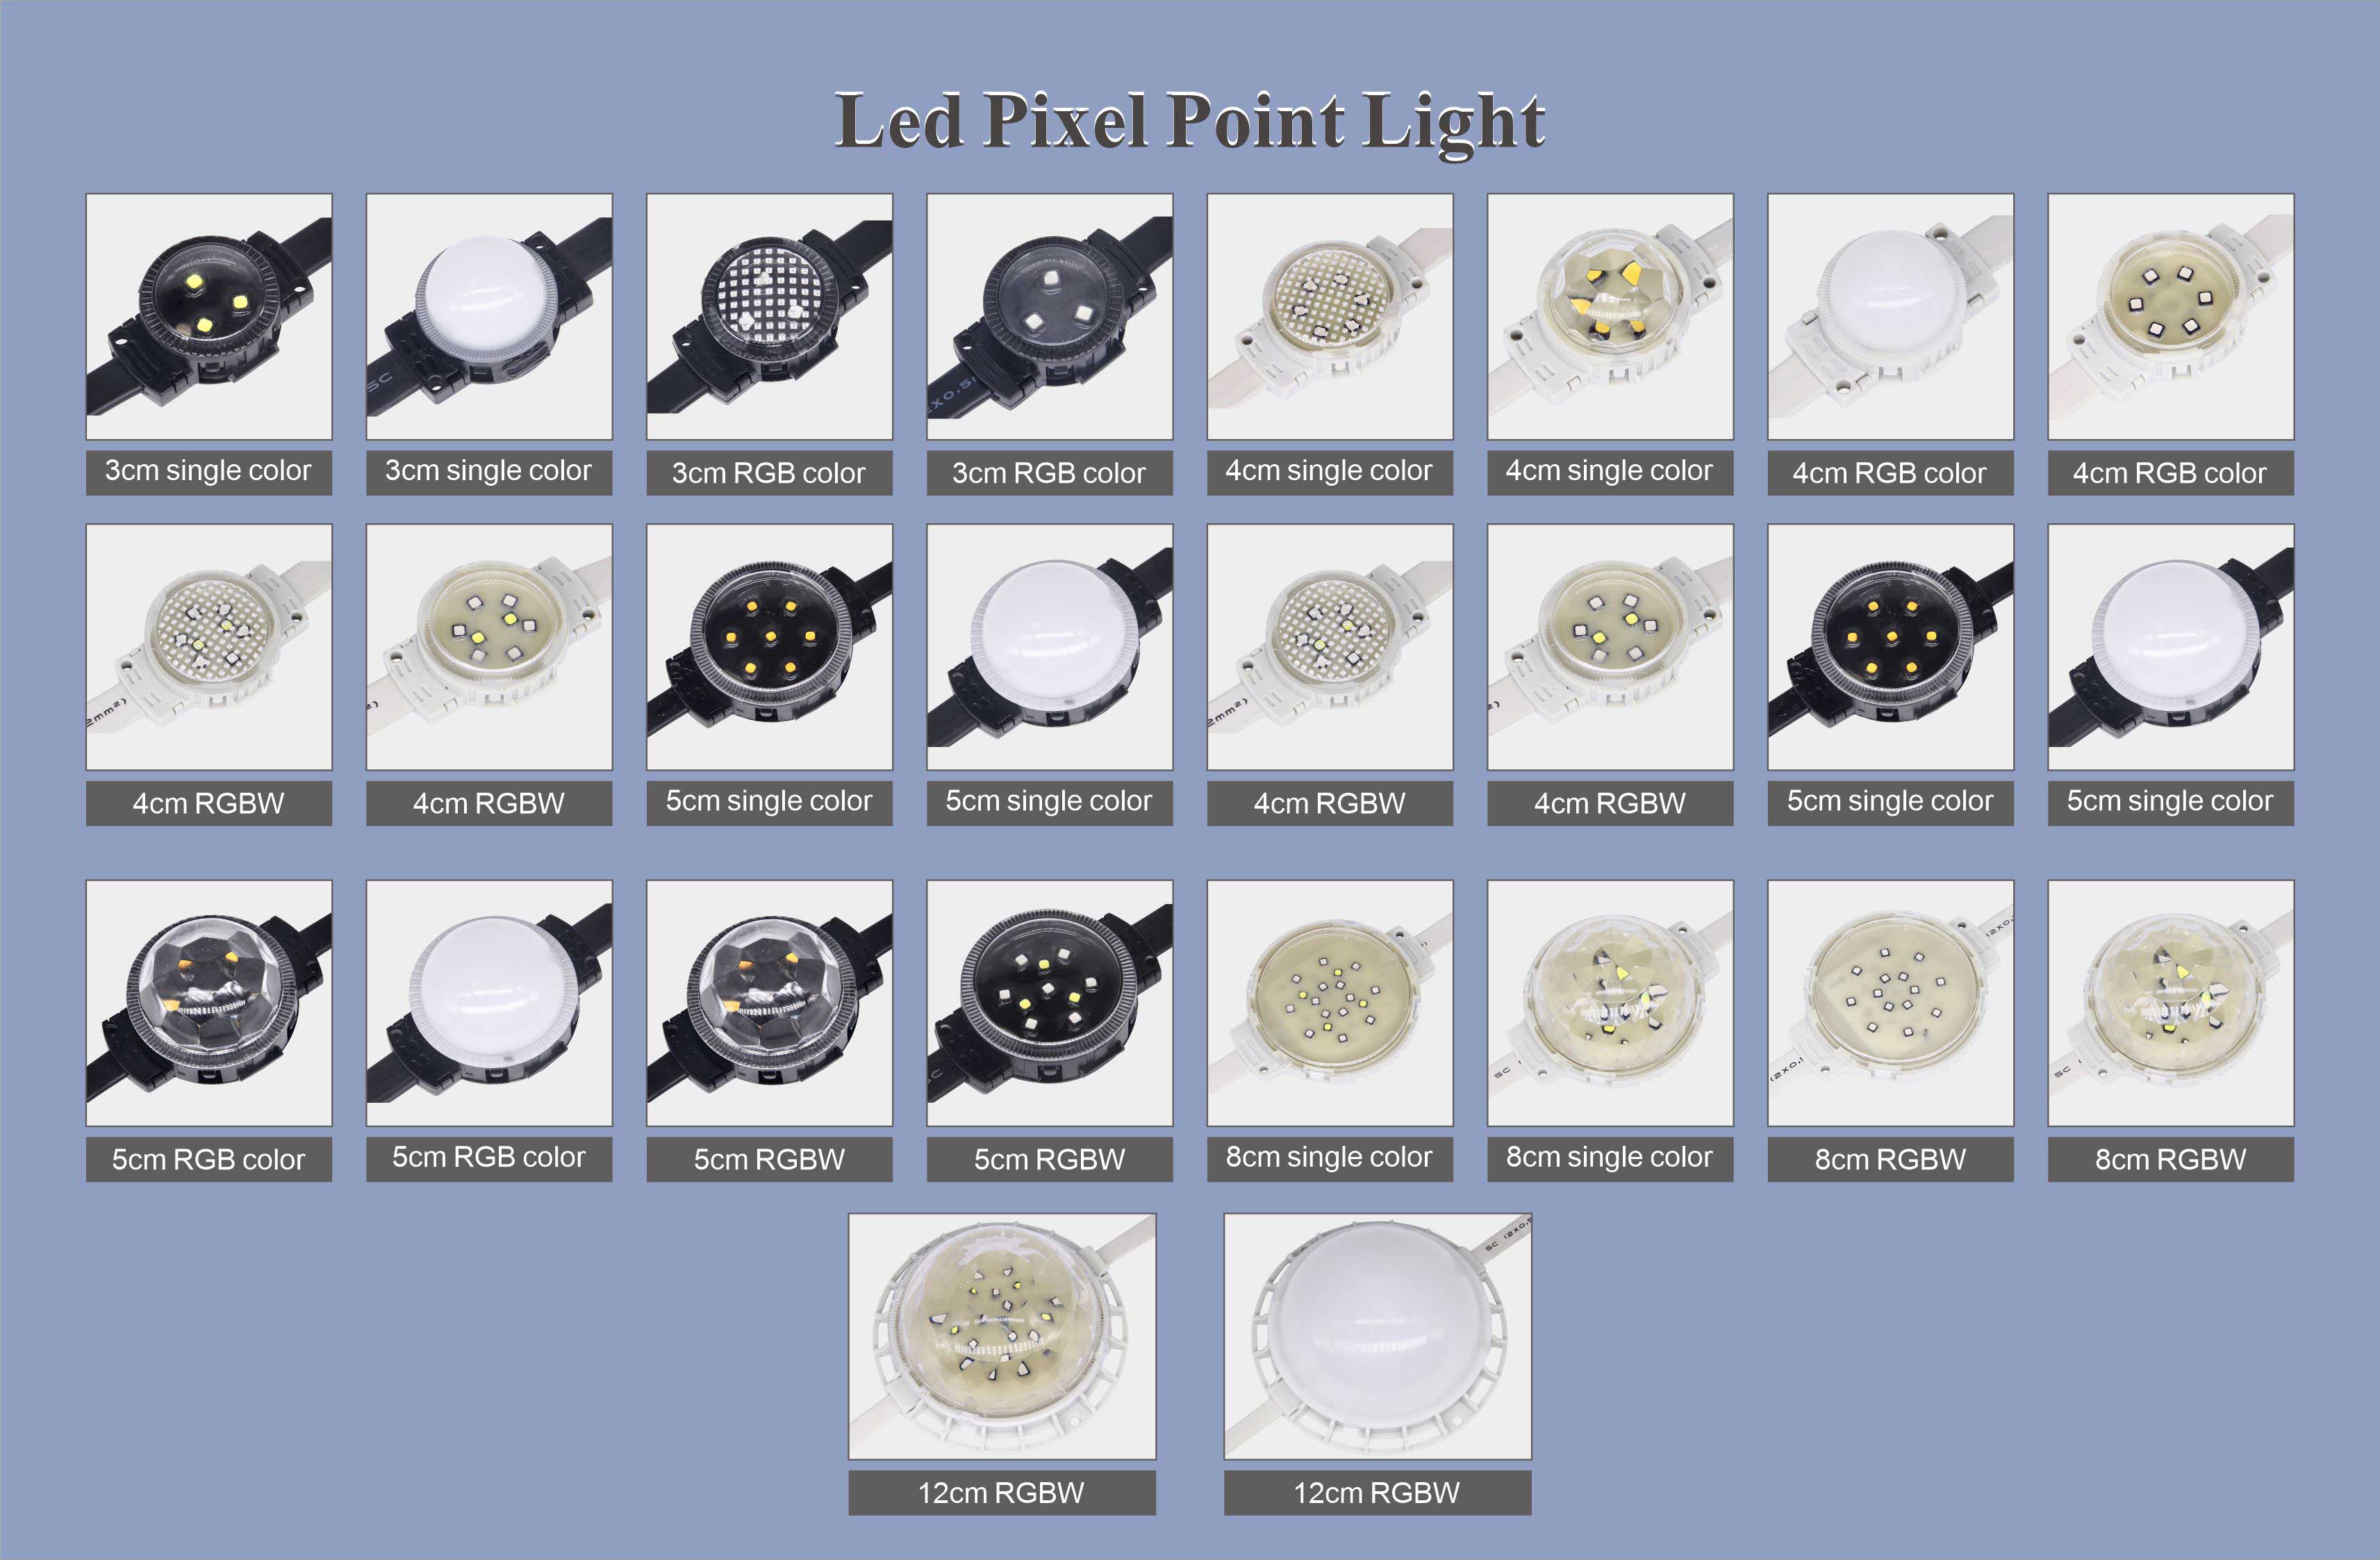 LED pixel point light 